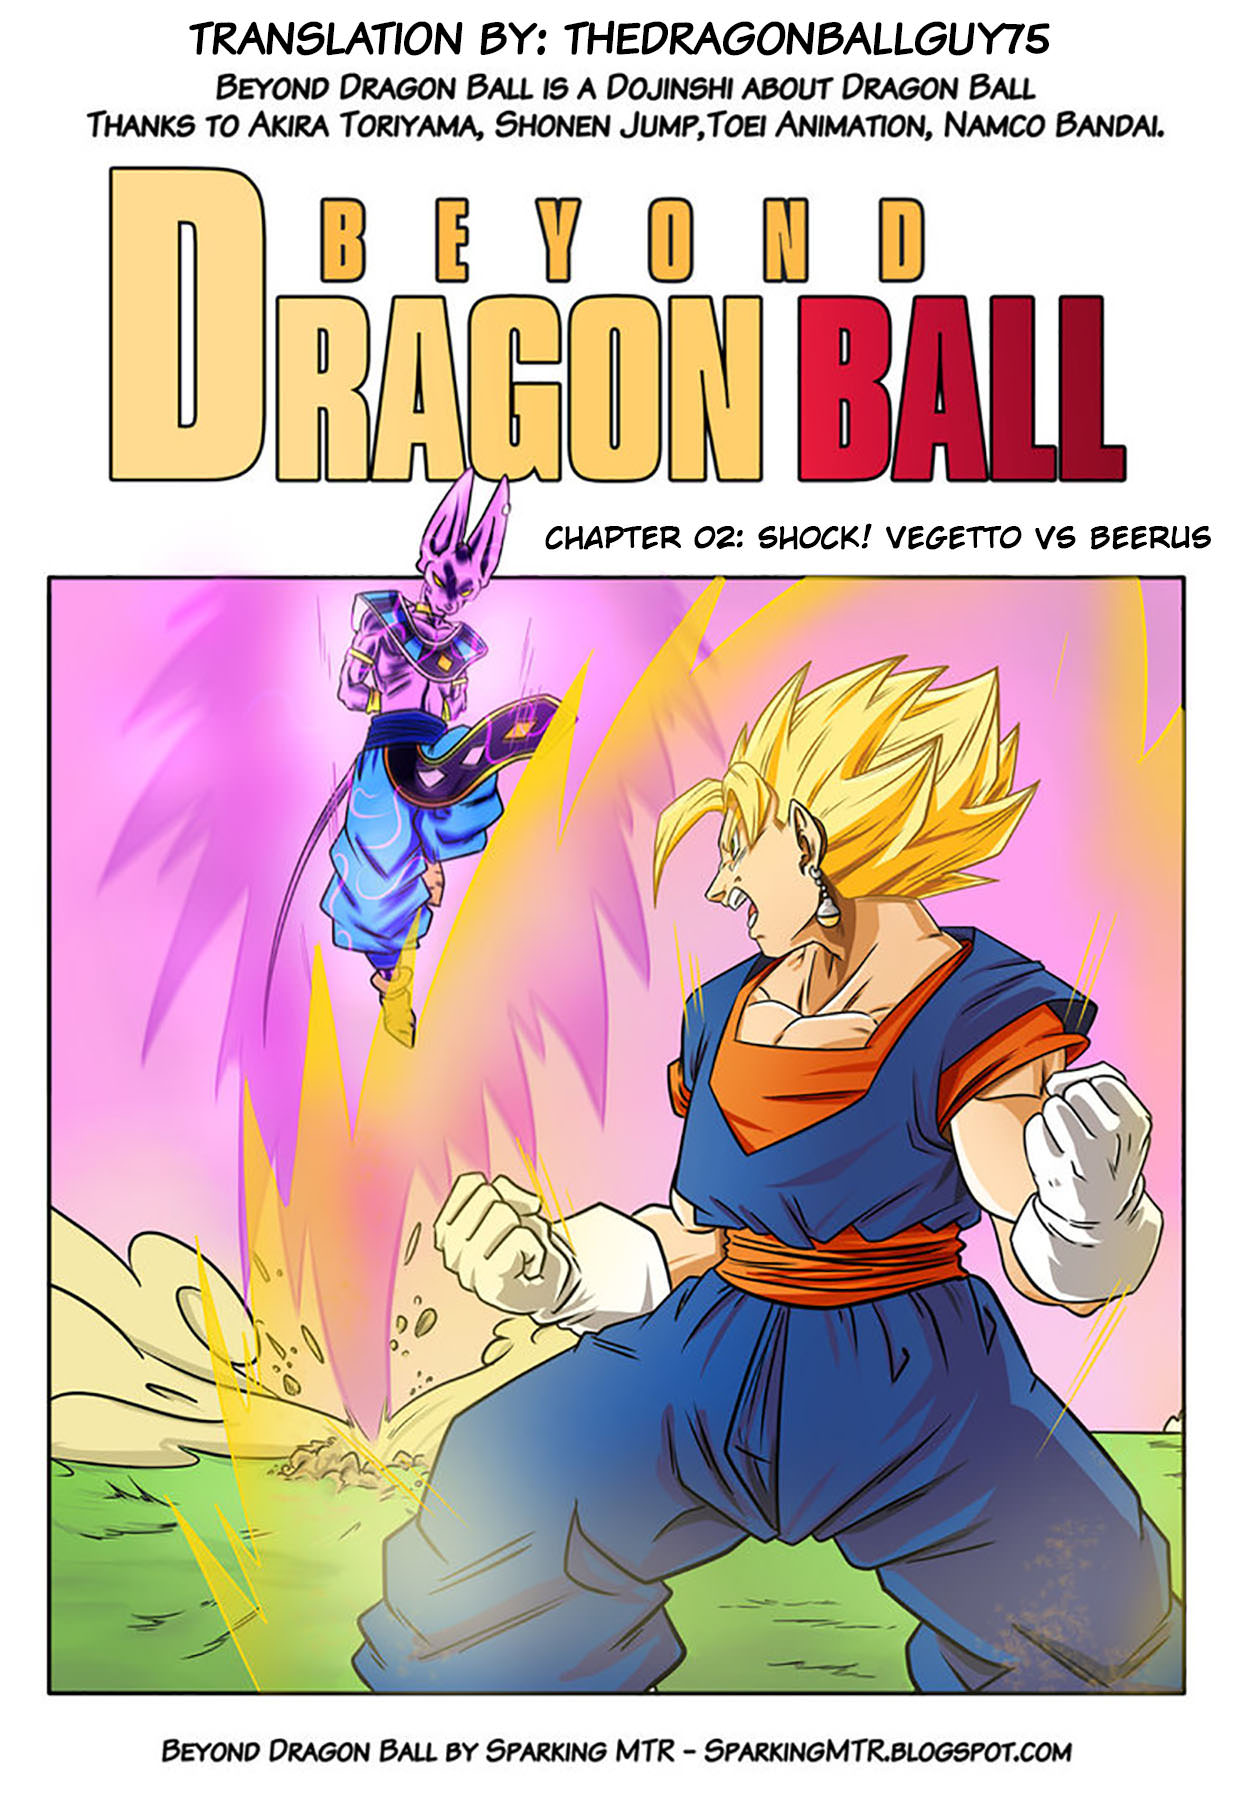 Dragon ball episode 50 english dubbed